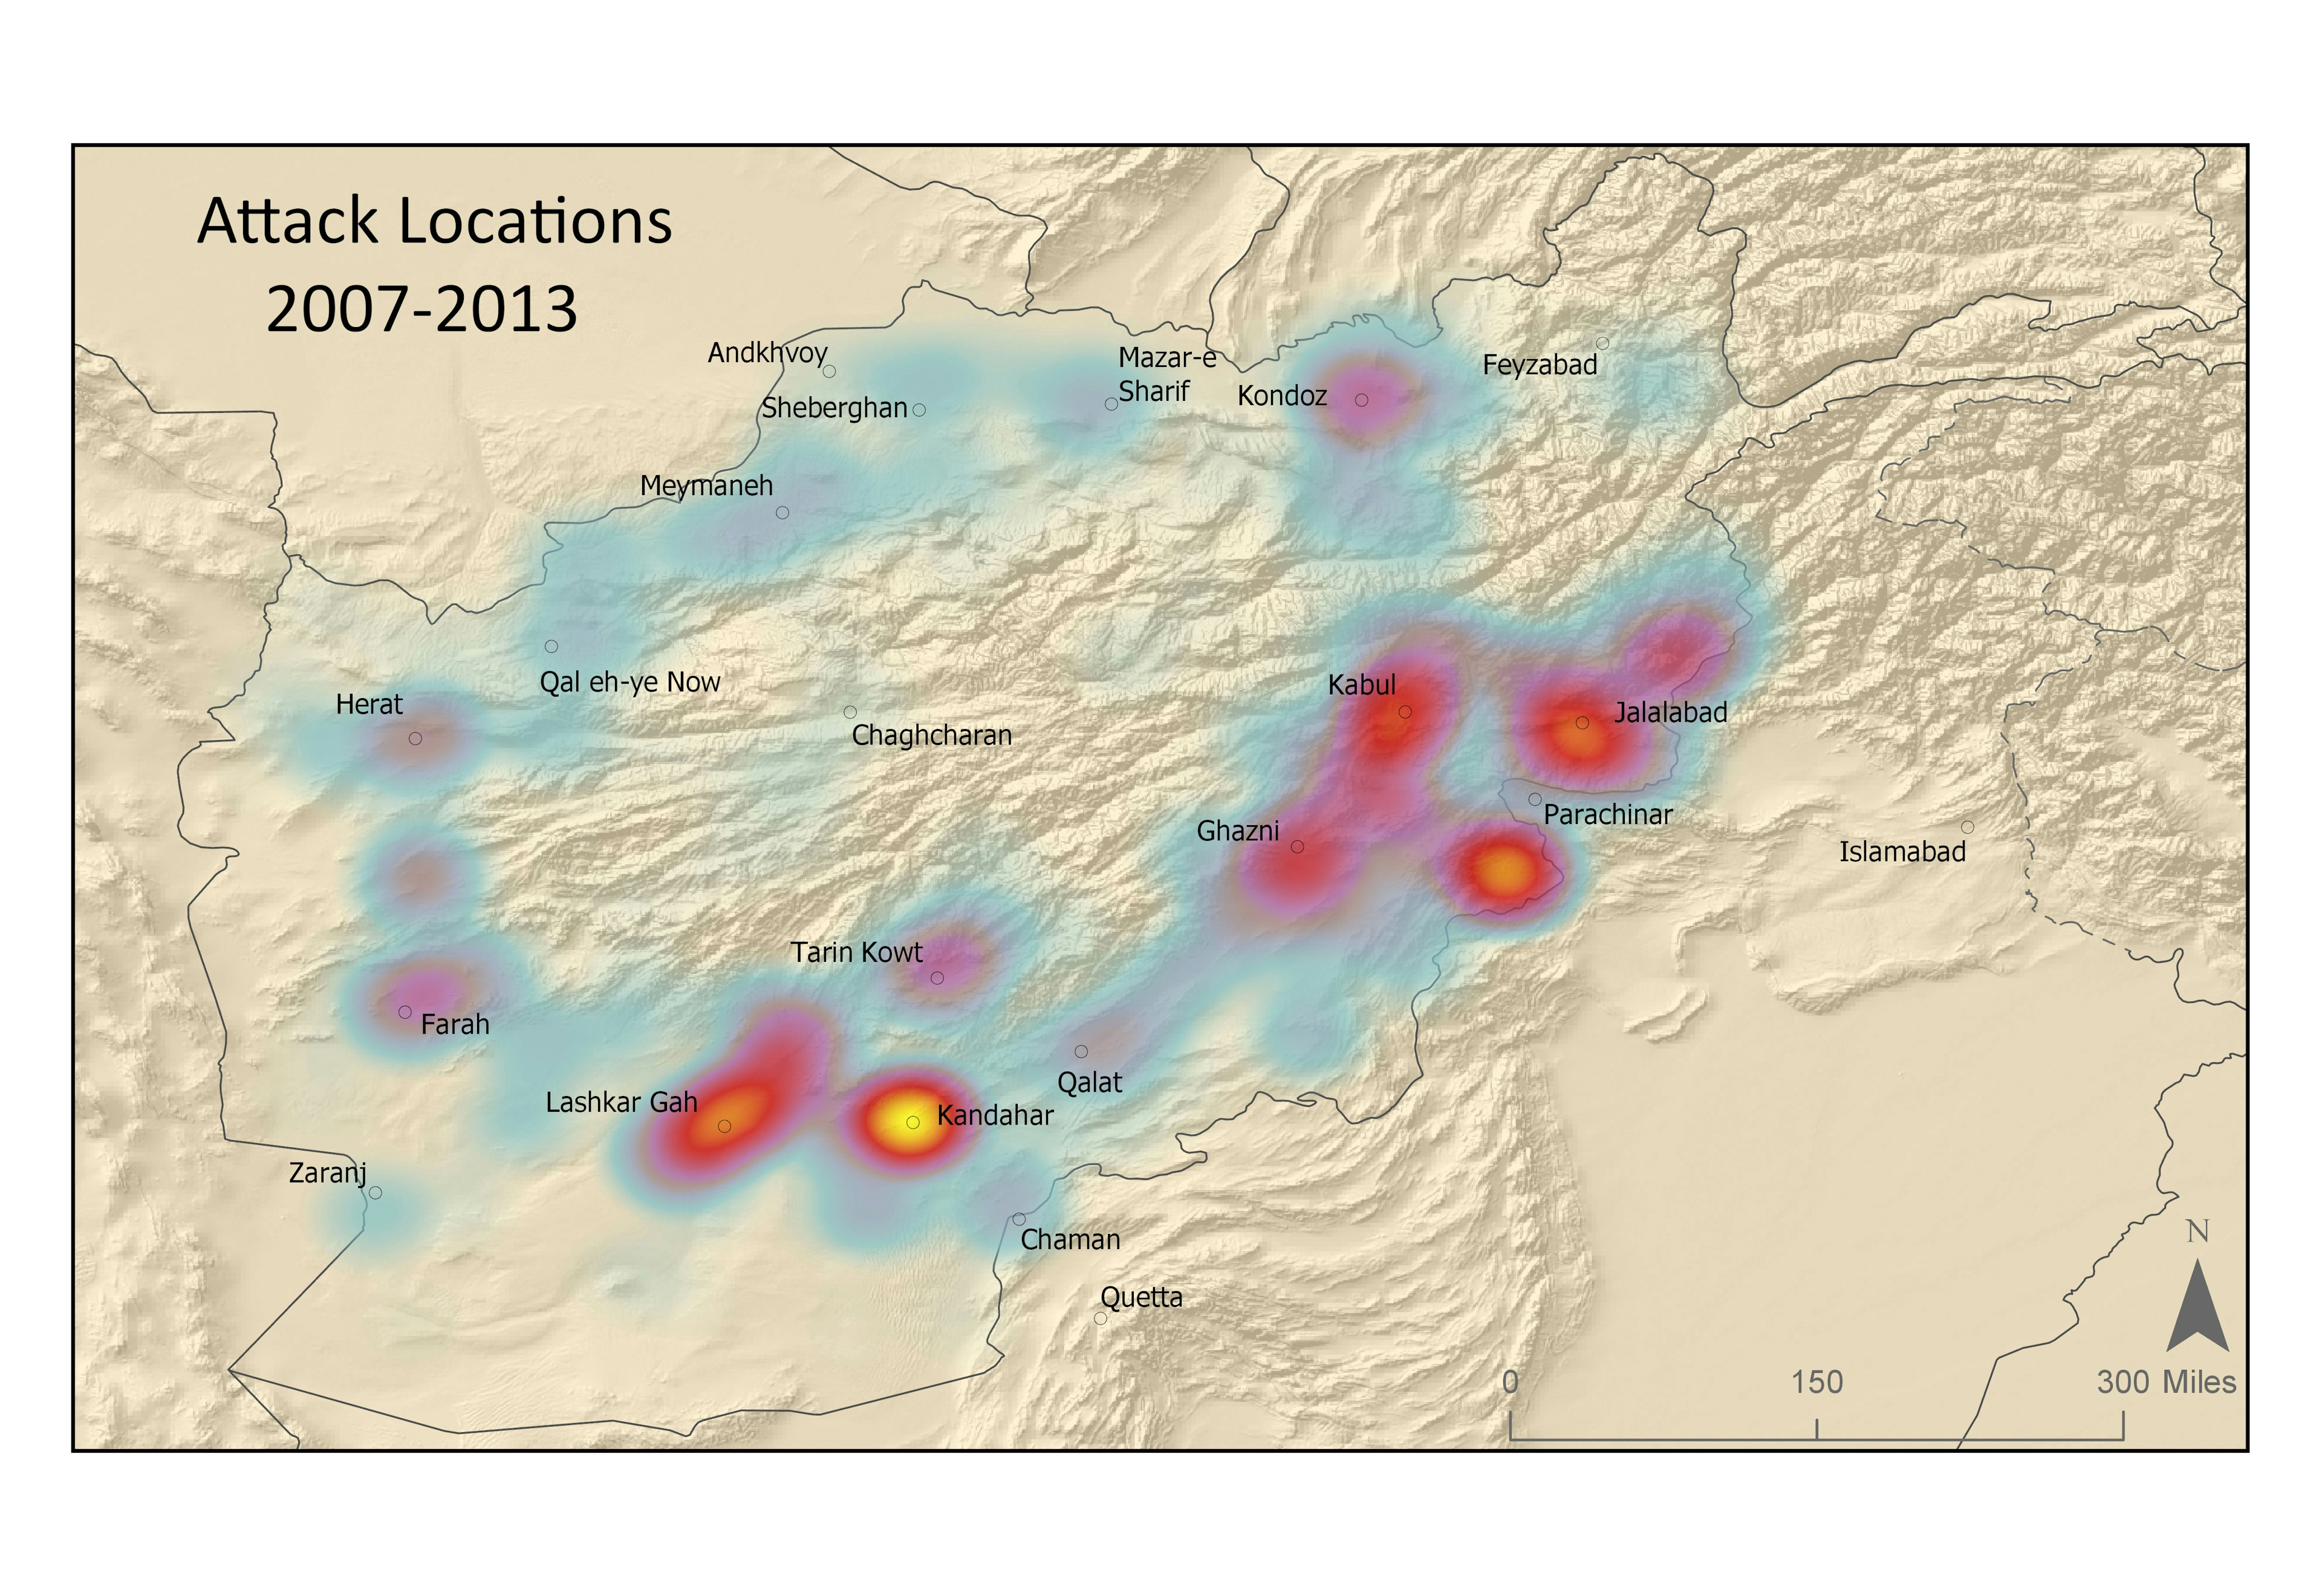 Terror Attacks in Afghanistan 2001-2017